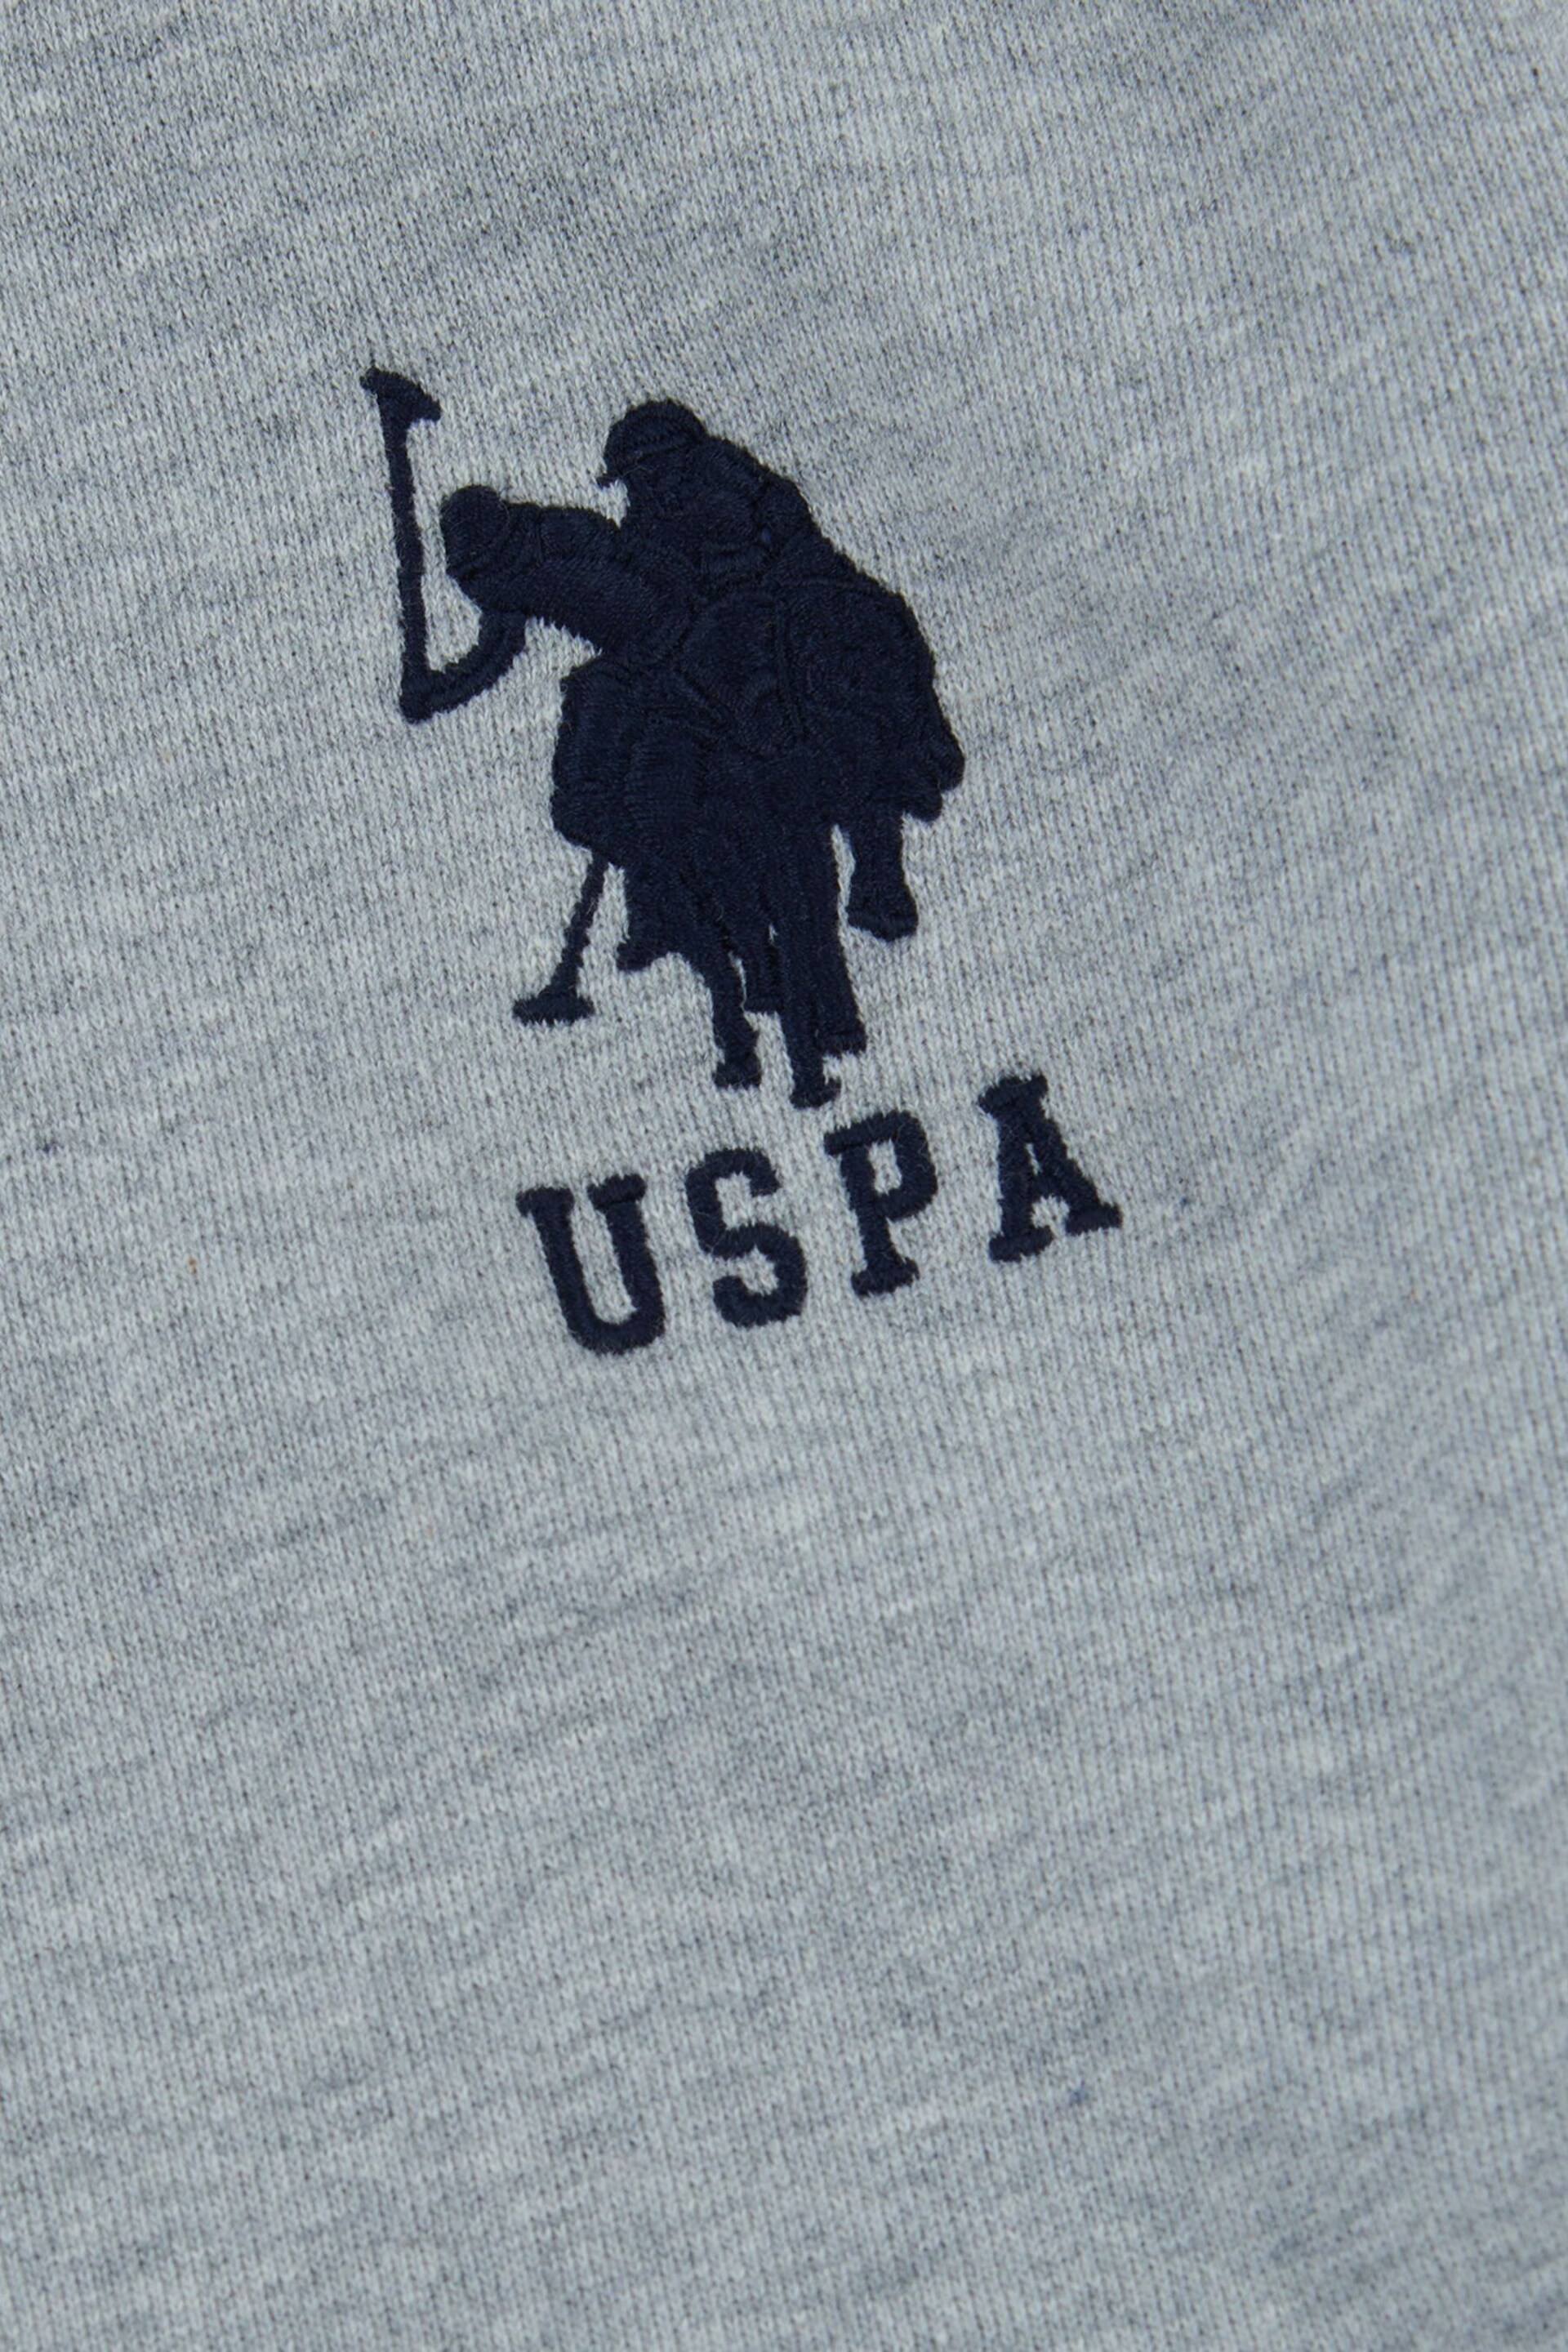 U.S. Polo Assn. Mens Vintage Grey Heather Crew Sweatshirt - Image 5 of 5